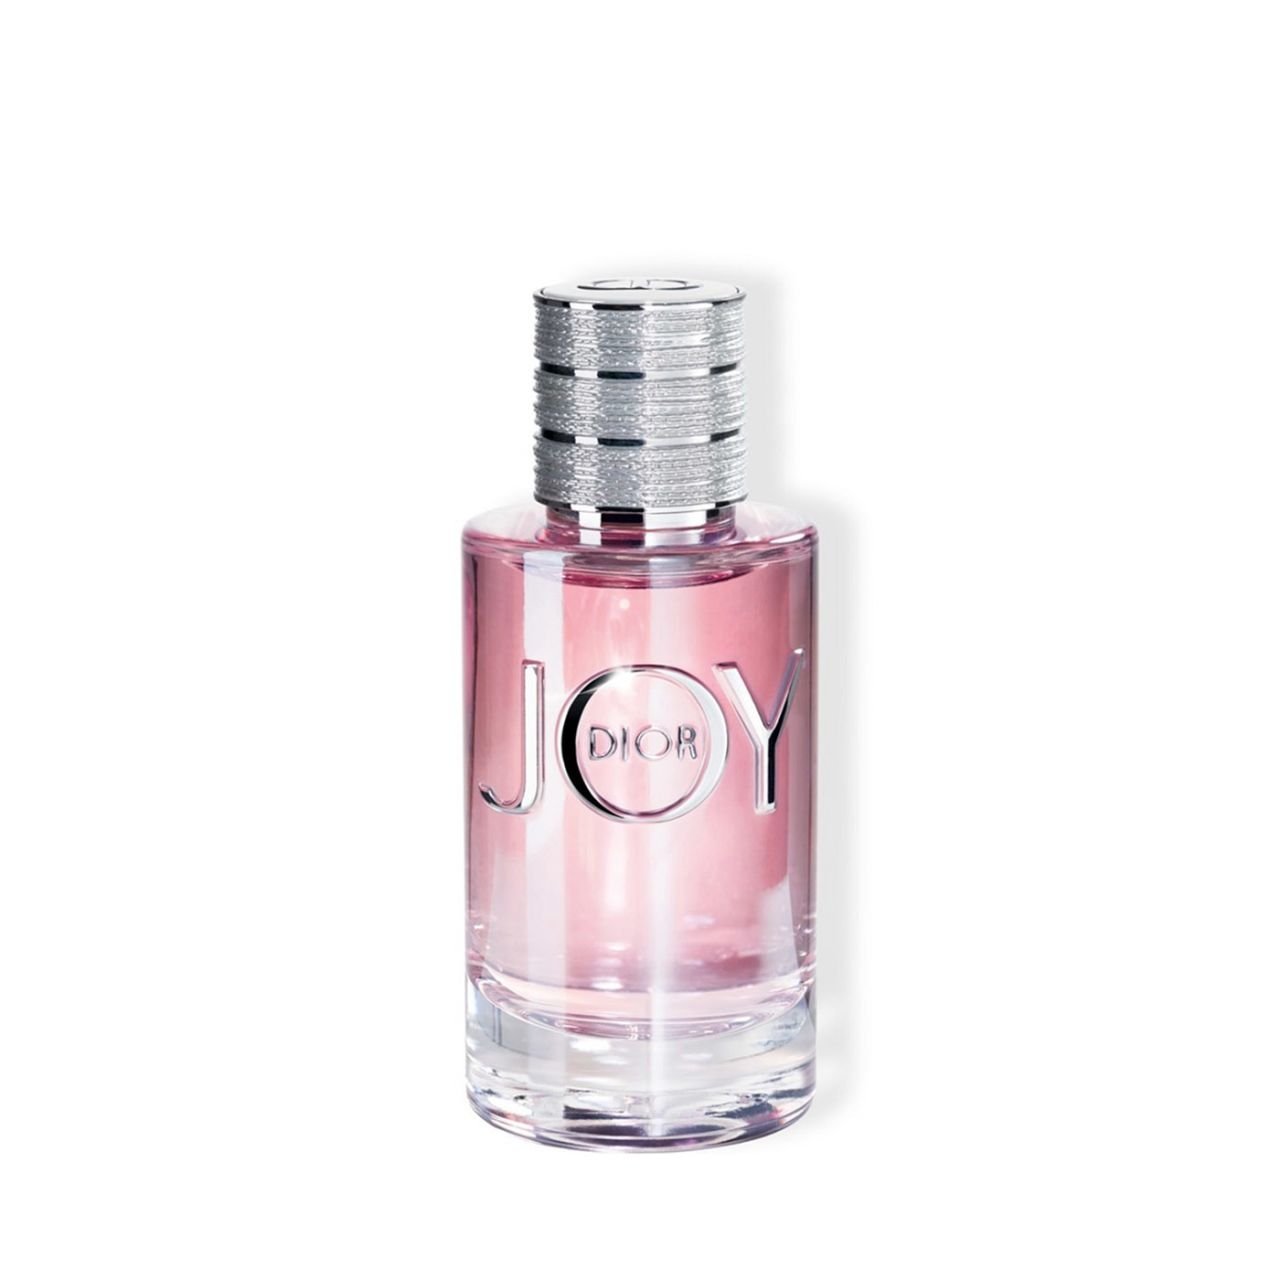 Dior Joy Eau De Parfum 5 ml. 